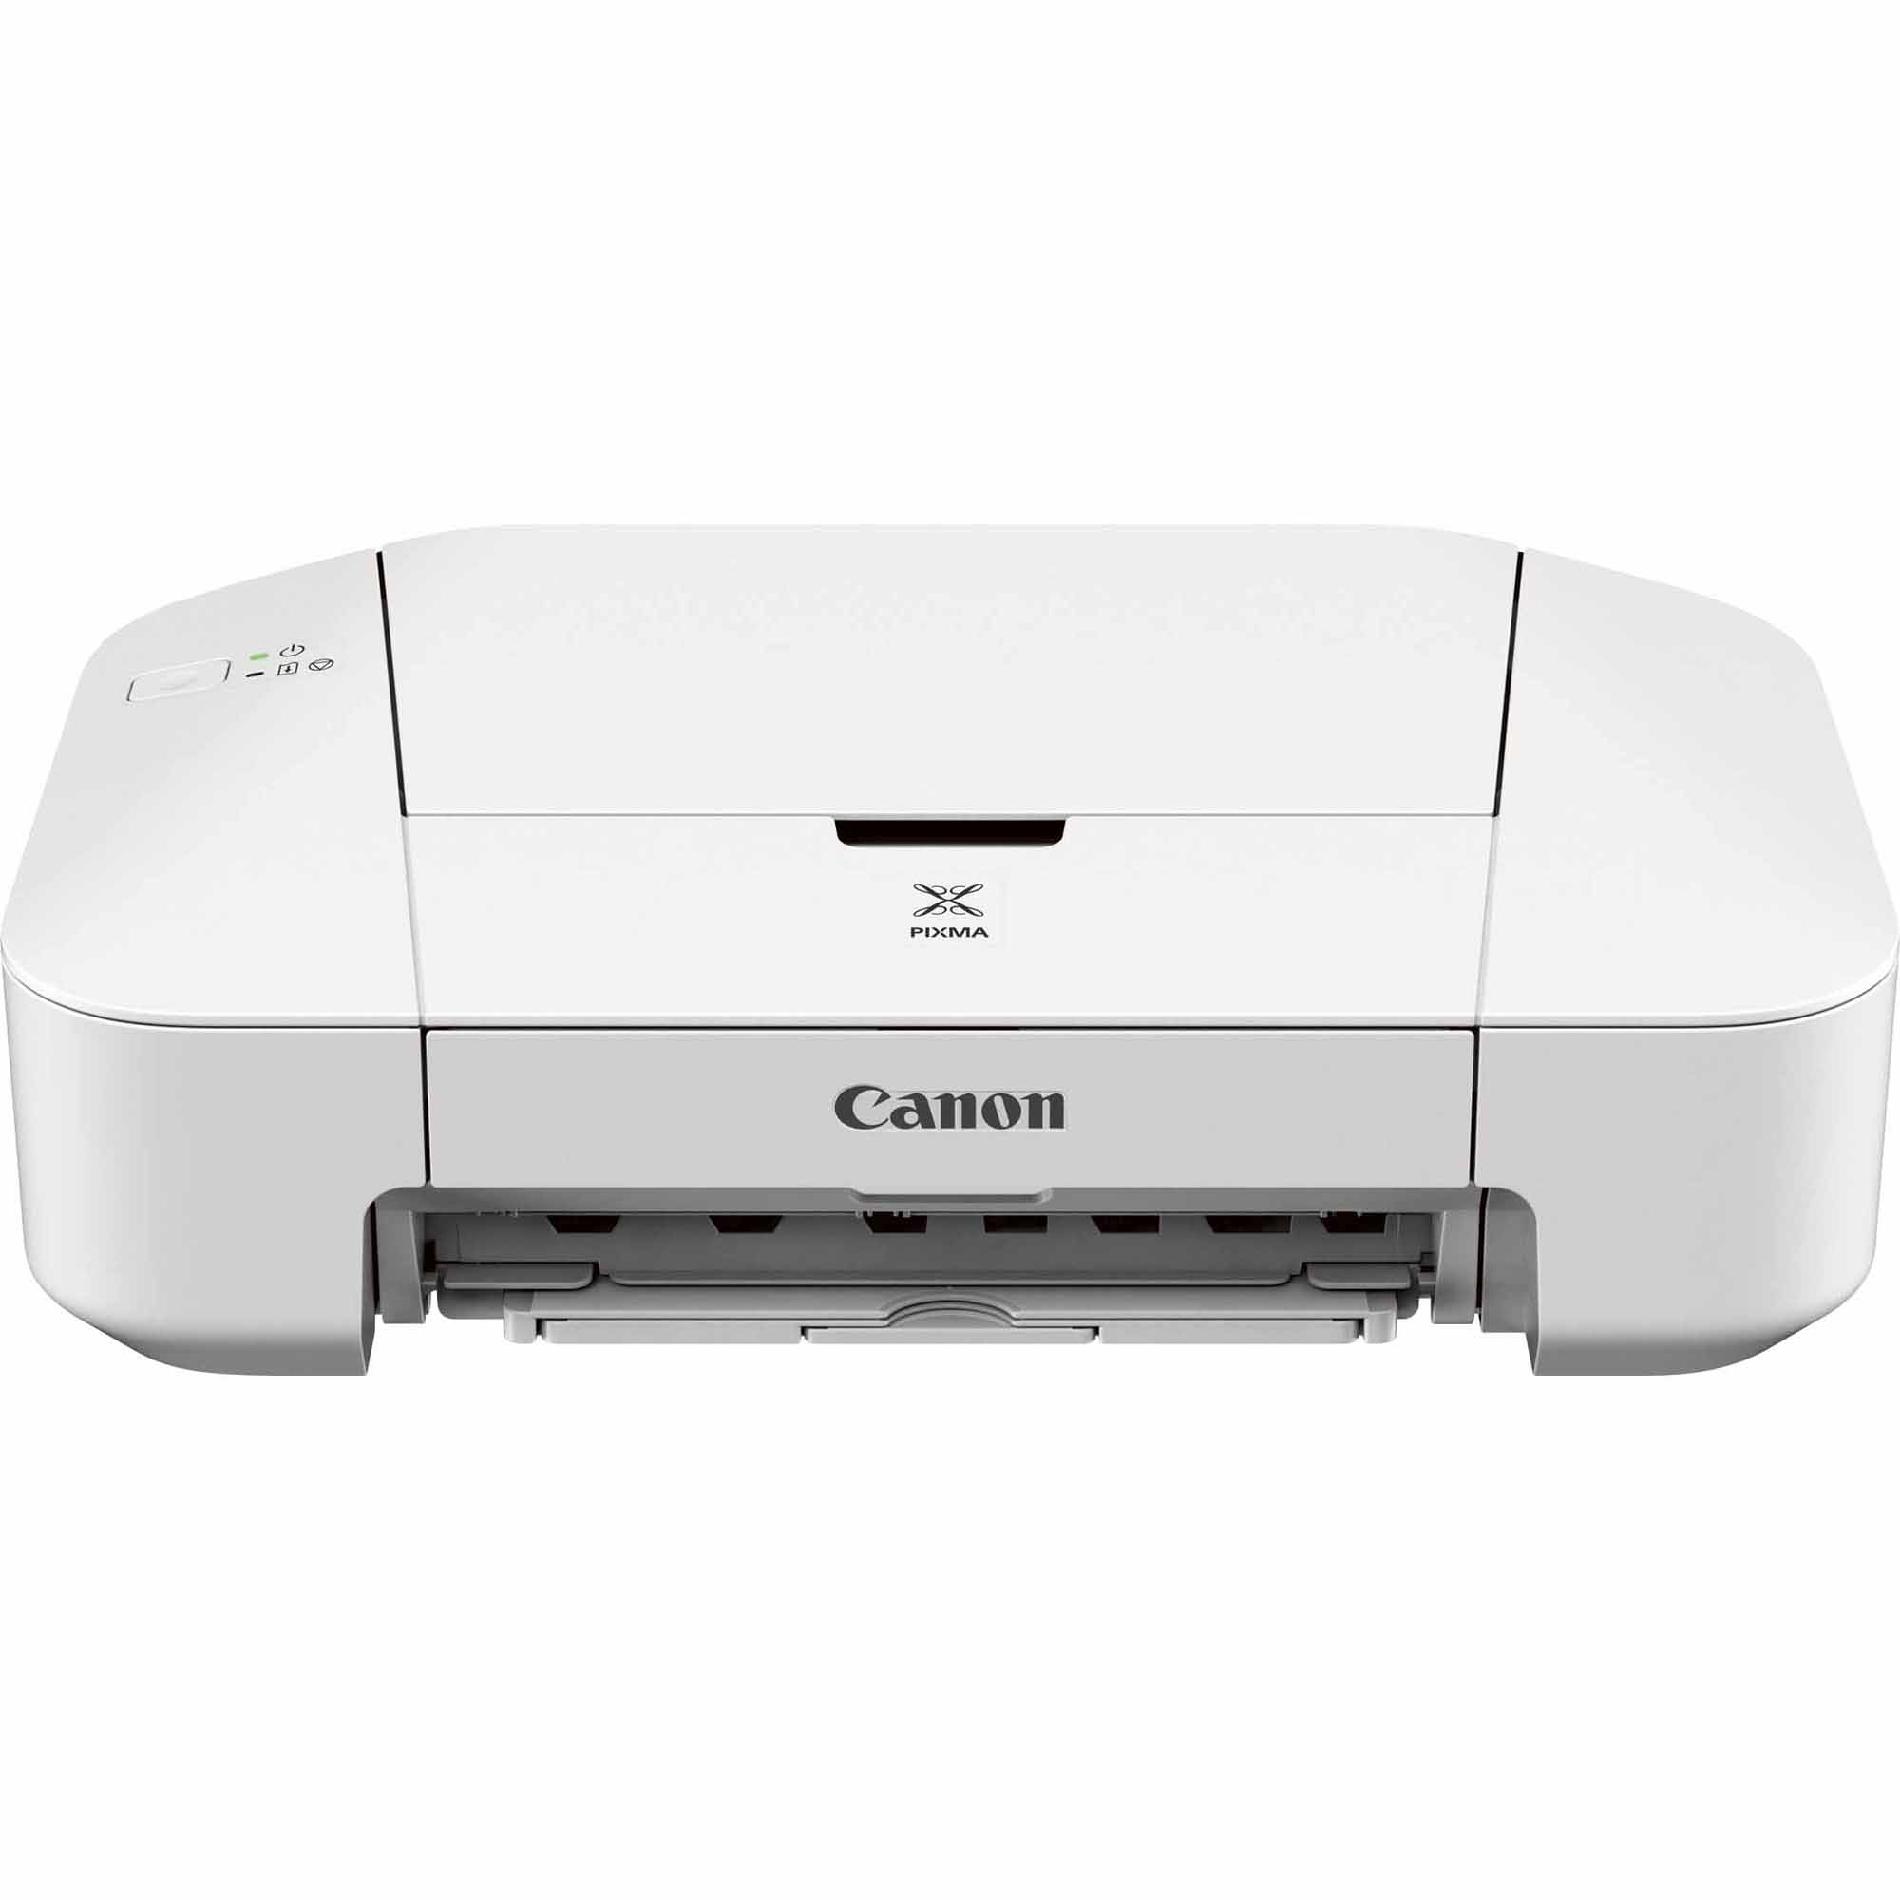 Canon PIXMA Inkjet Photo Printer—$19.99